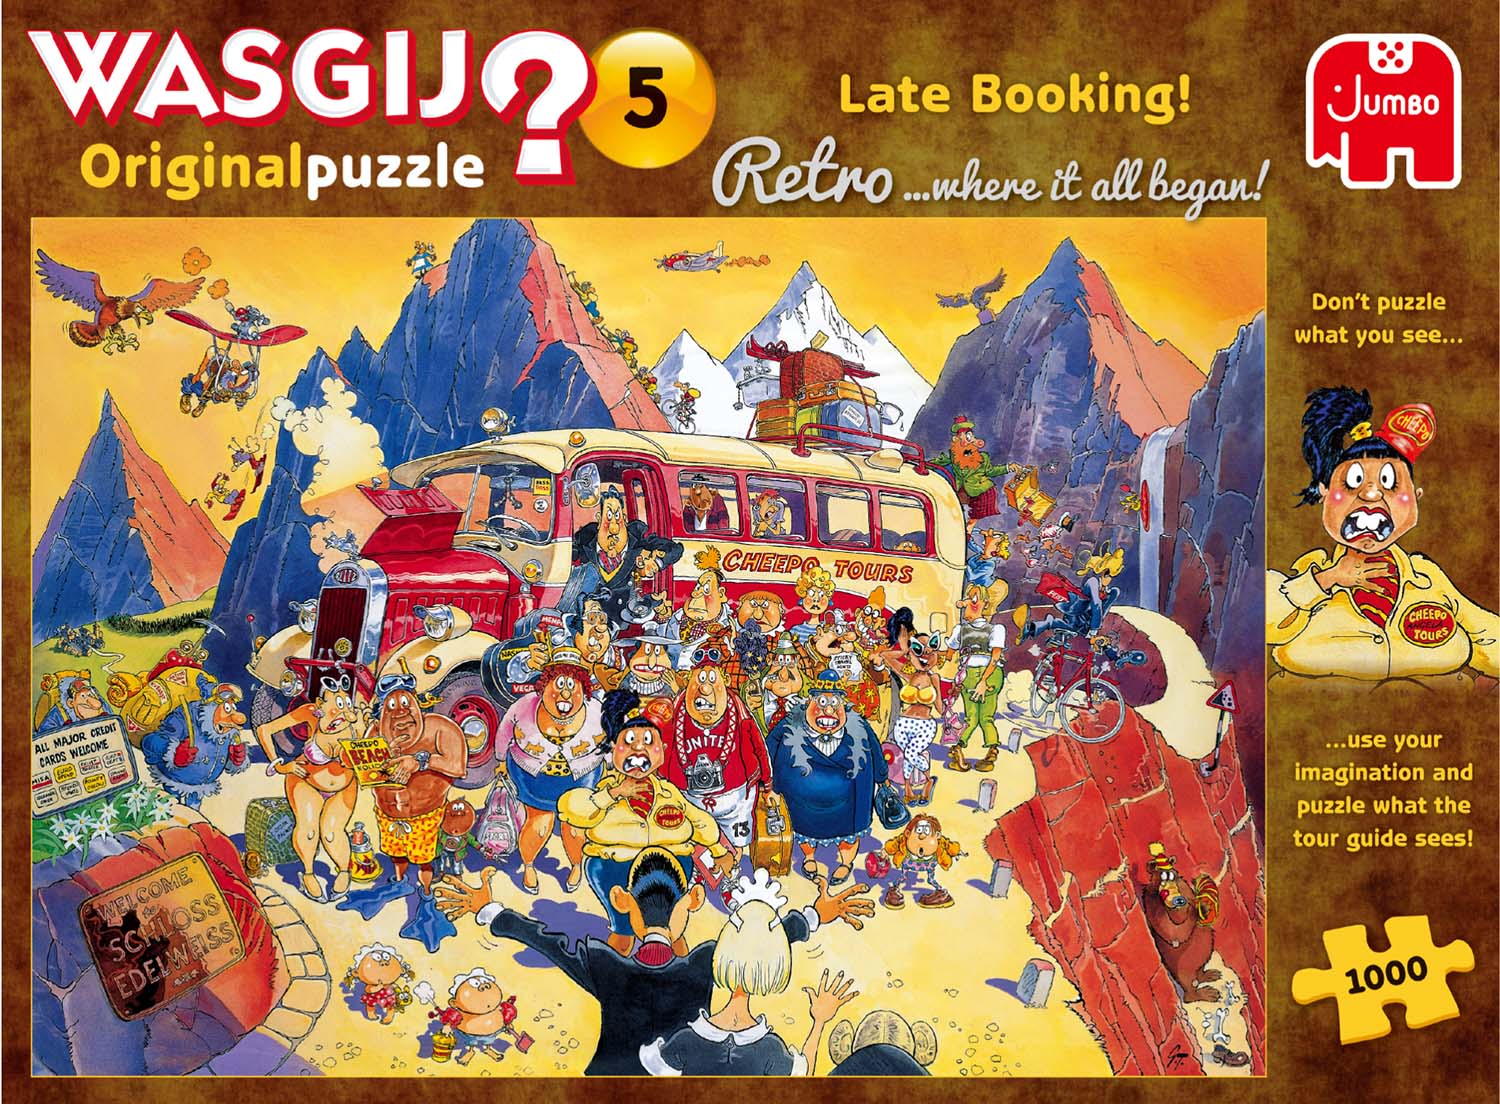 Wasgij Retro Original 5: Late Booking